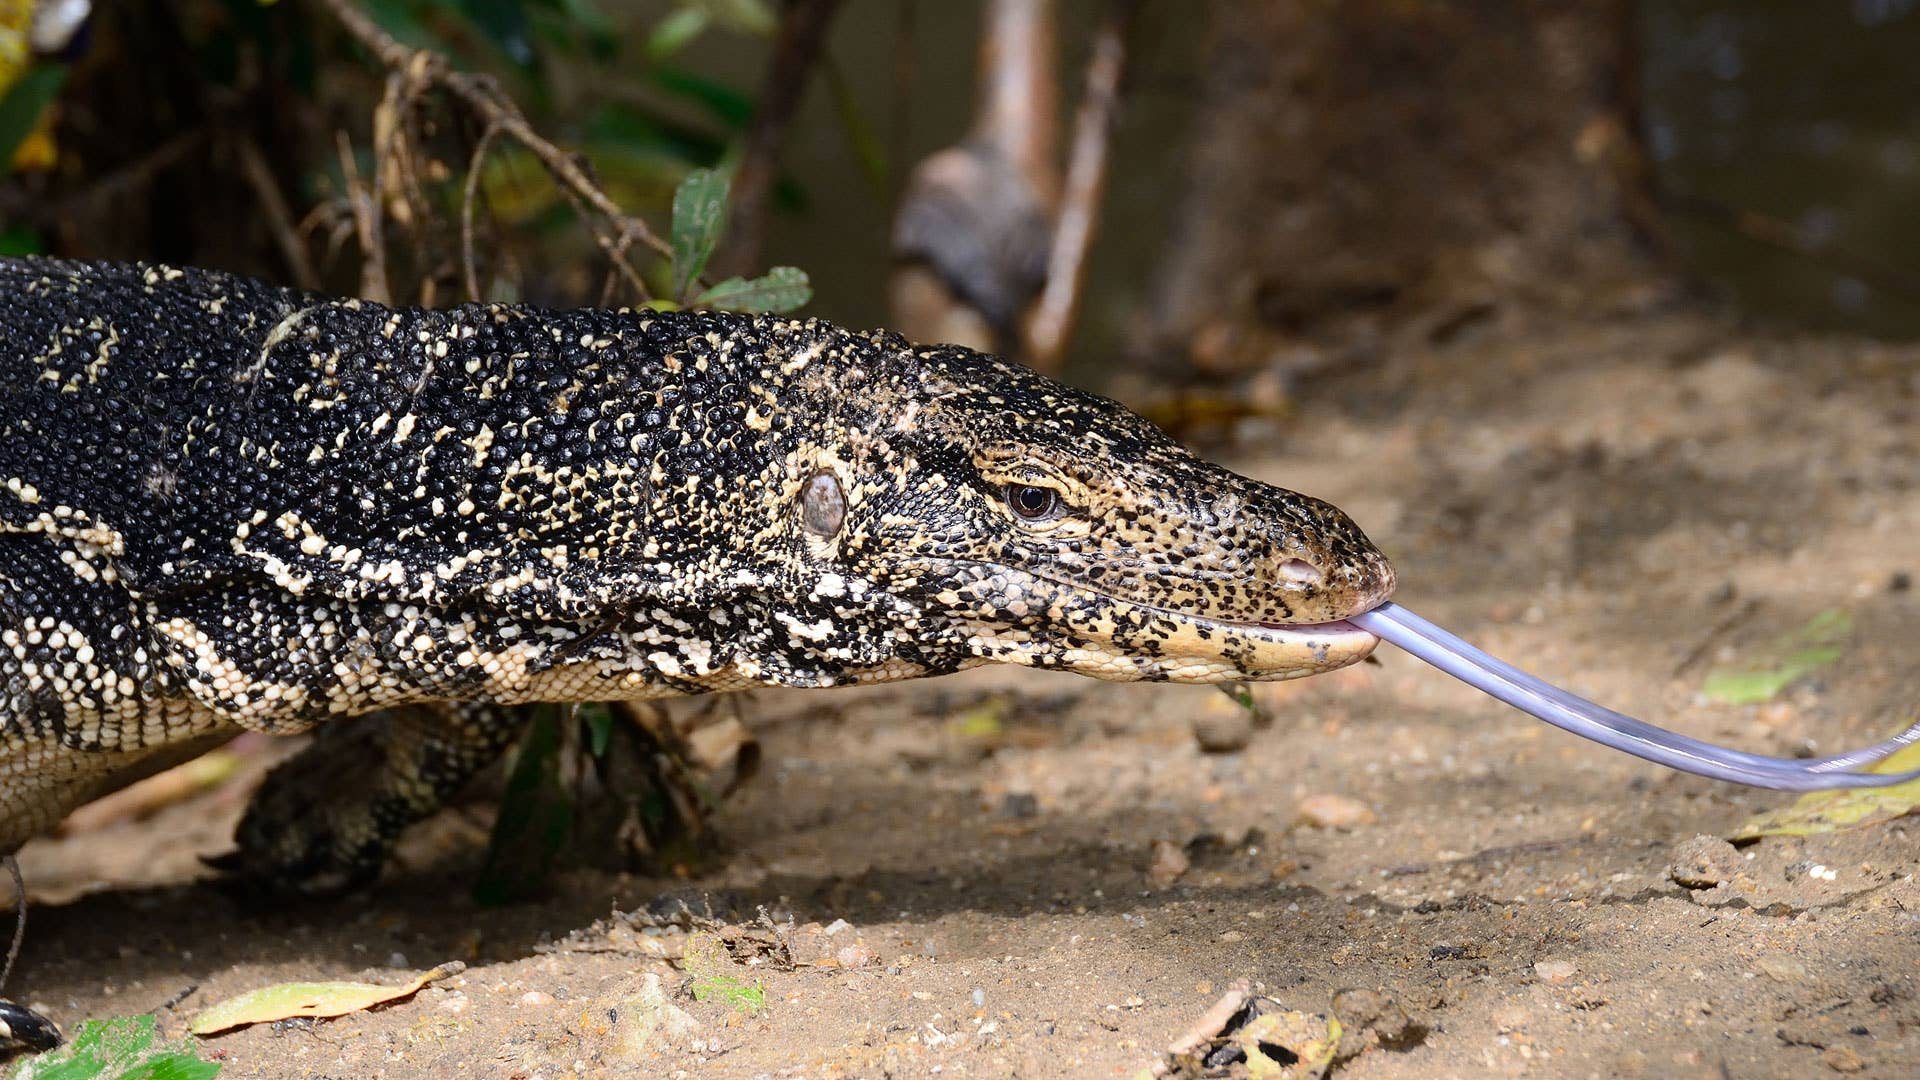 Wild water monitor lizard in a river in Sri Lanka.